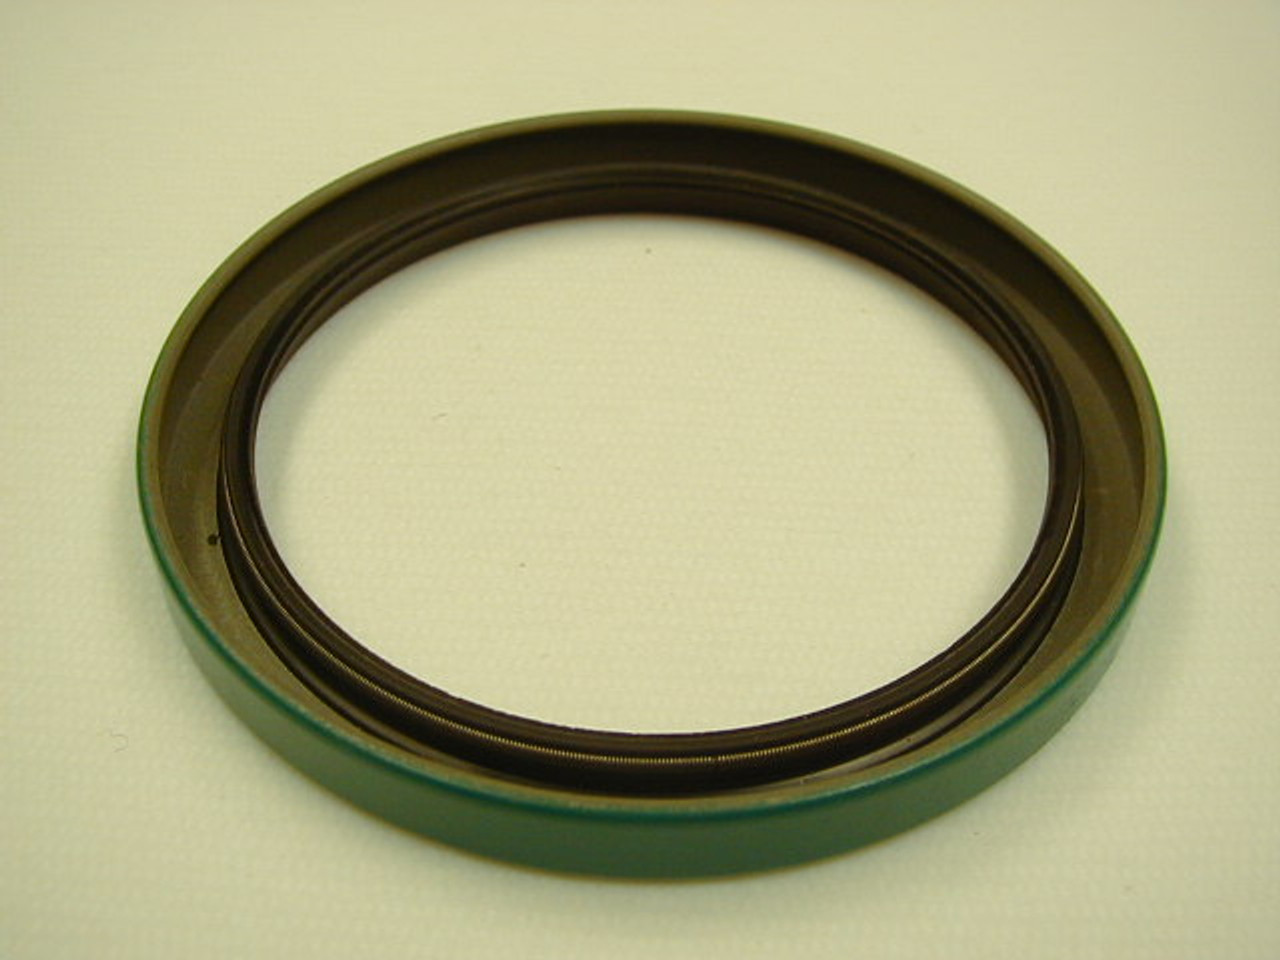 1.125" (28.58mm) Inch Metal Single Lip Nitrile Oil Seal  11378 CRW1 R